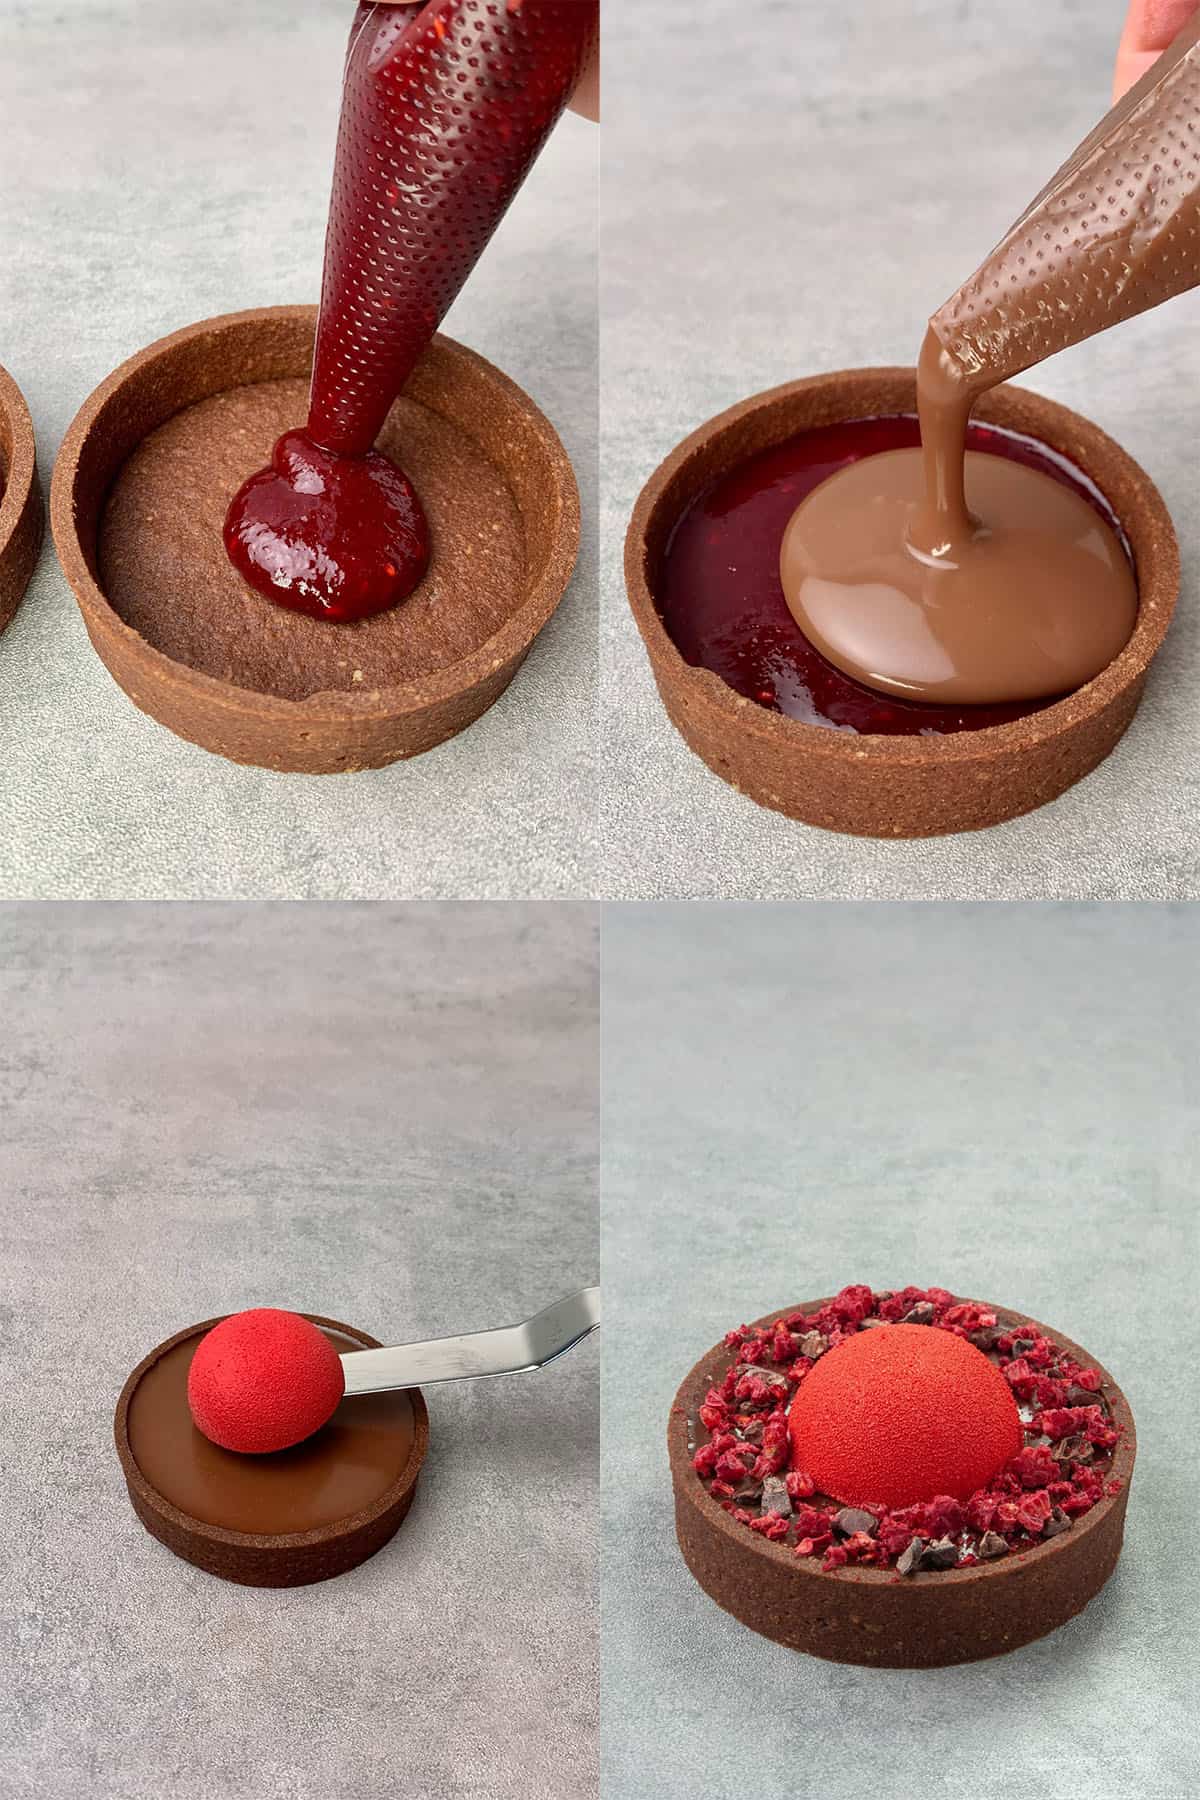 Assembling process of the chocolate raspberry tart.